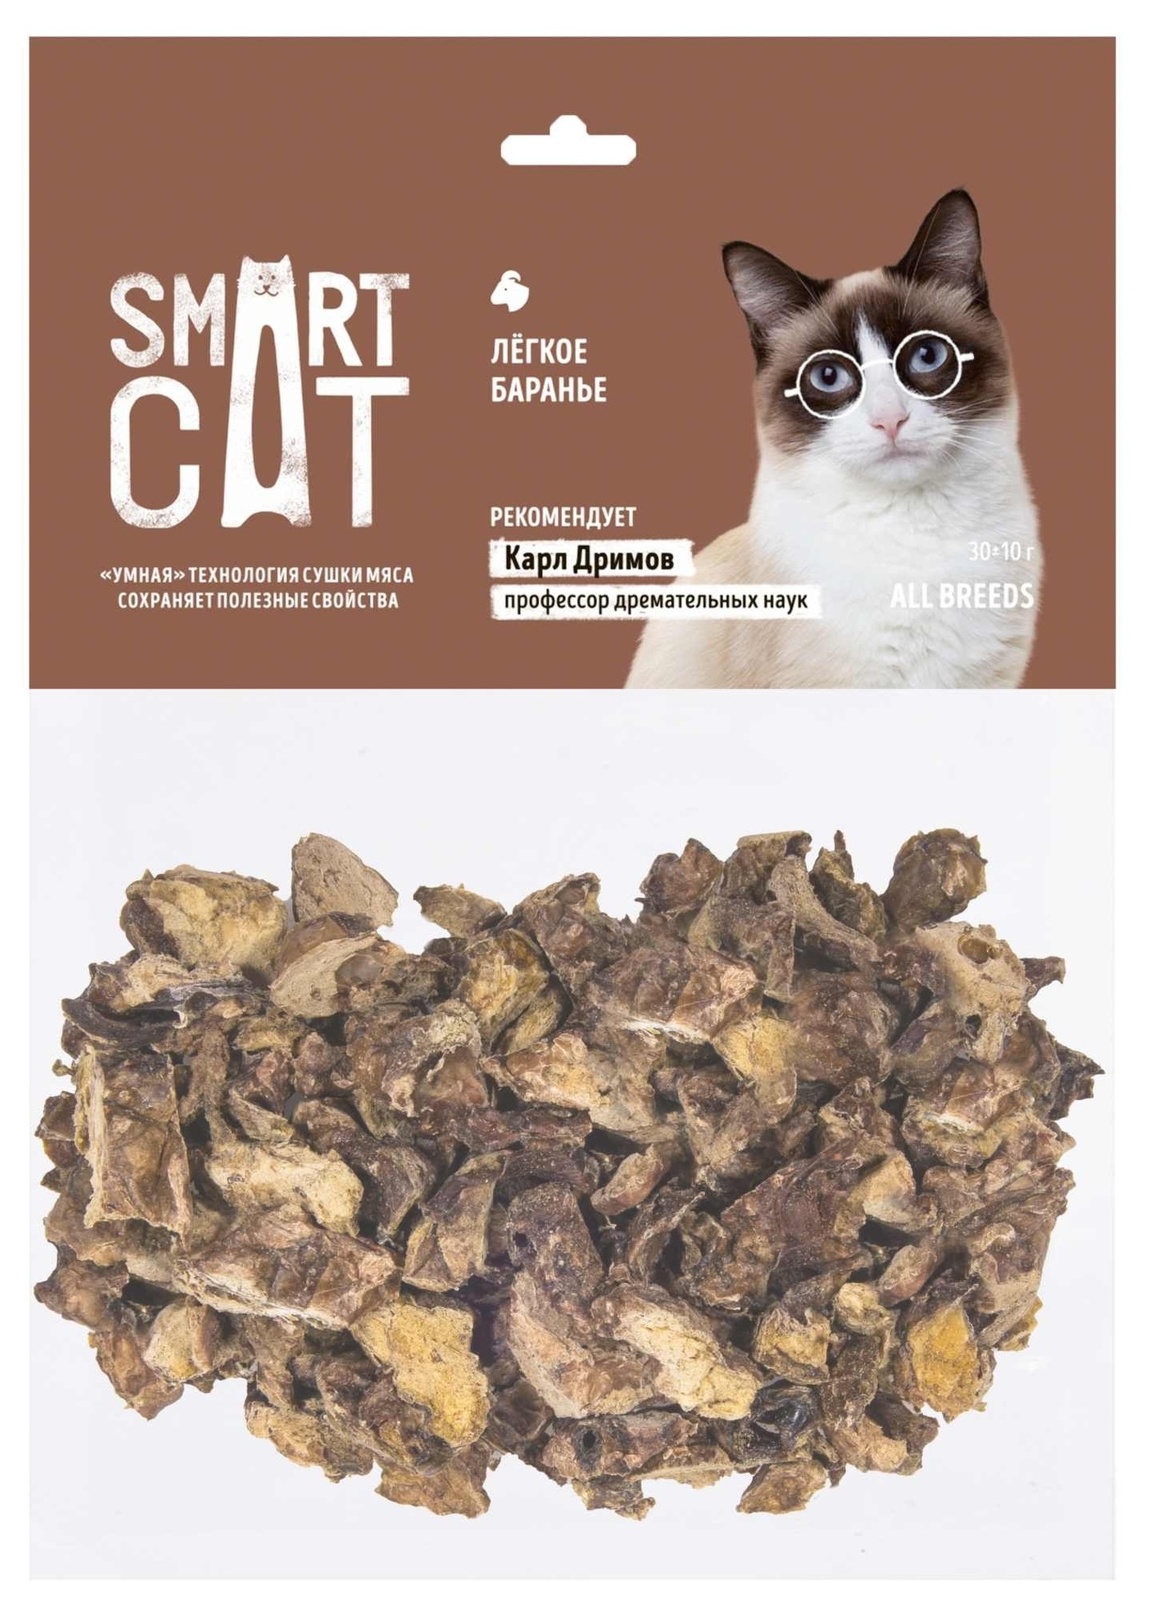 smart cat лакомства легкое баранье 48аг53 0 03 кг 42859 18 шт Smart Cat лакомства Smart Cat лакомства легкое баранье (30 г)